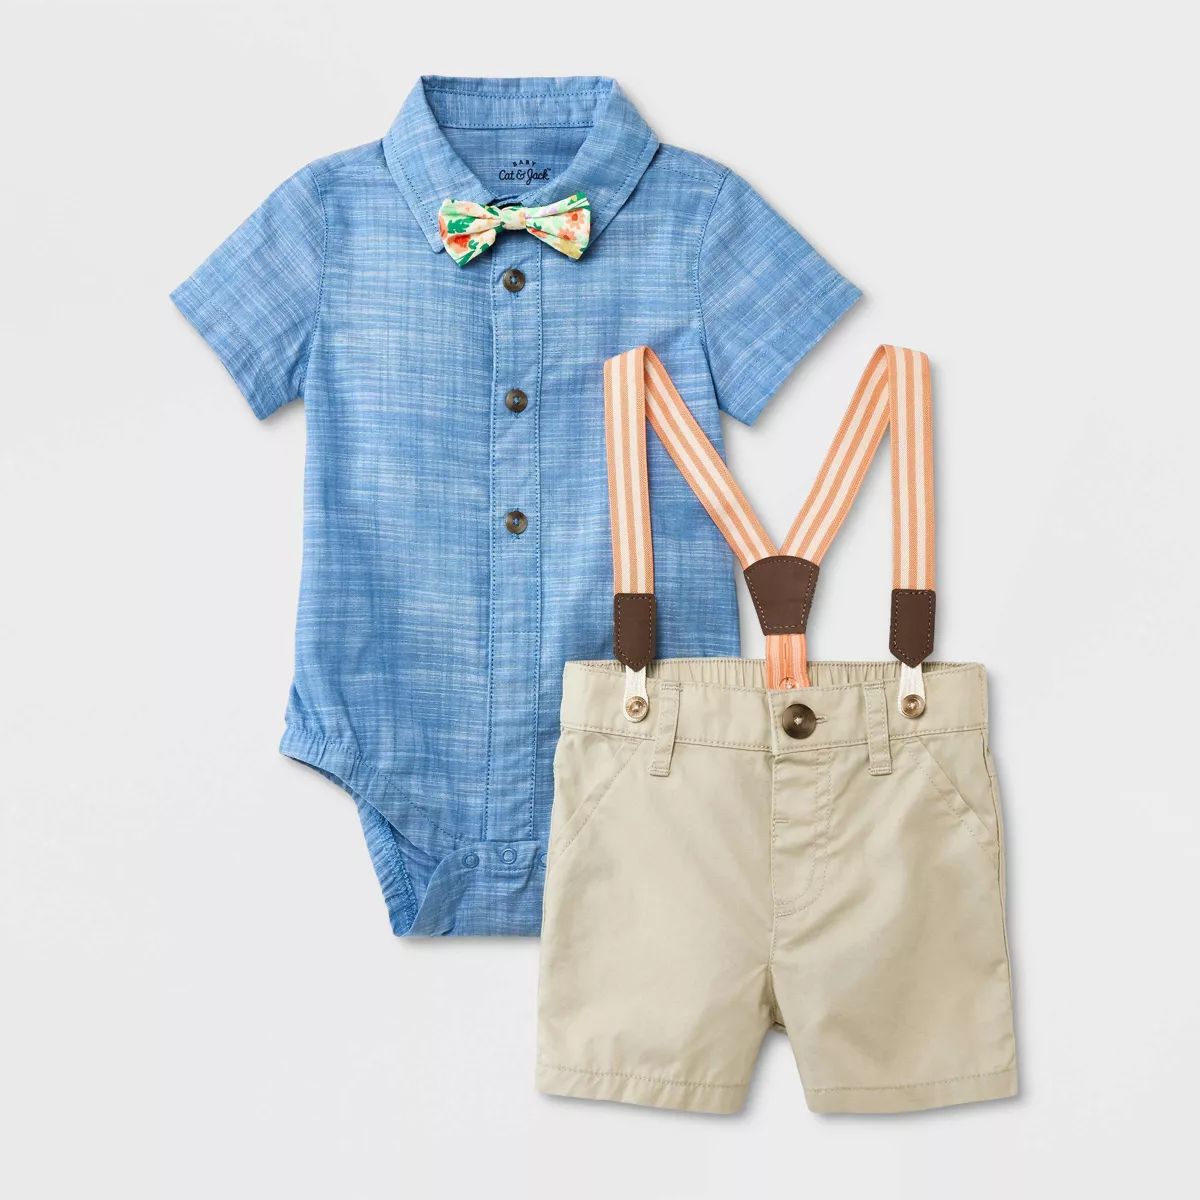 Baby Boys' Mini Man Suspender Top & Bottom Set with Bow Tie - Cat & Jack™ Cream/Blue | Target